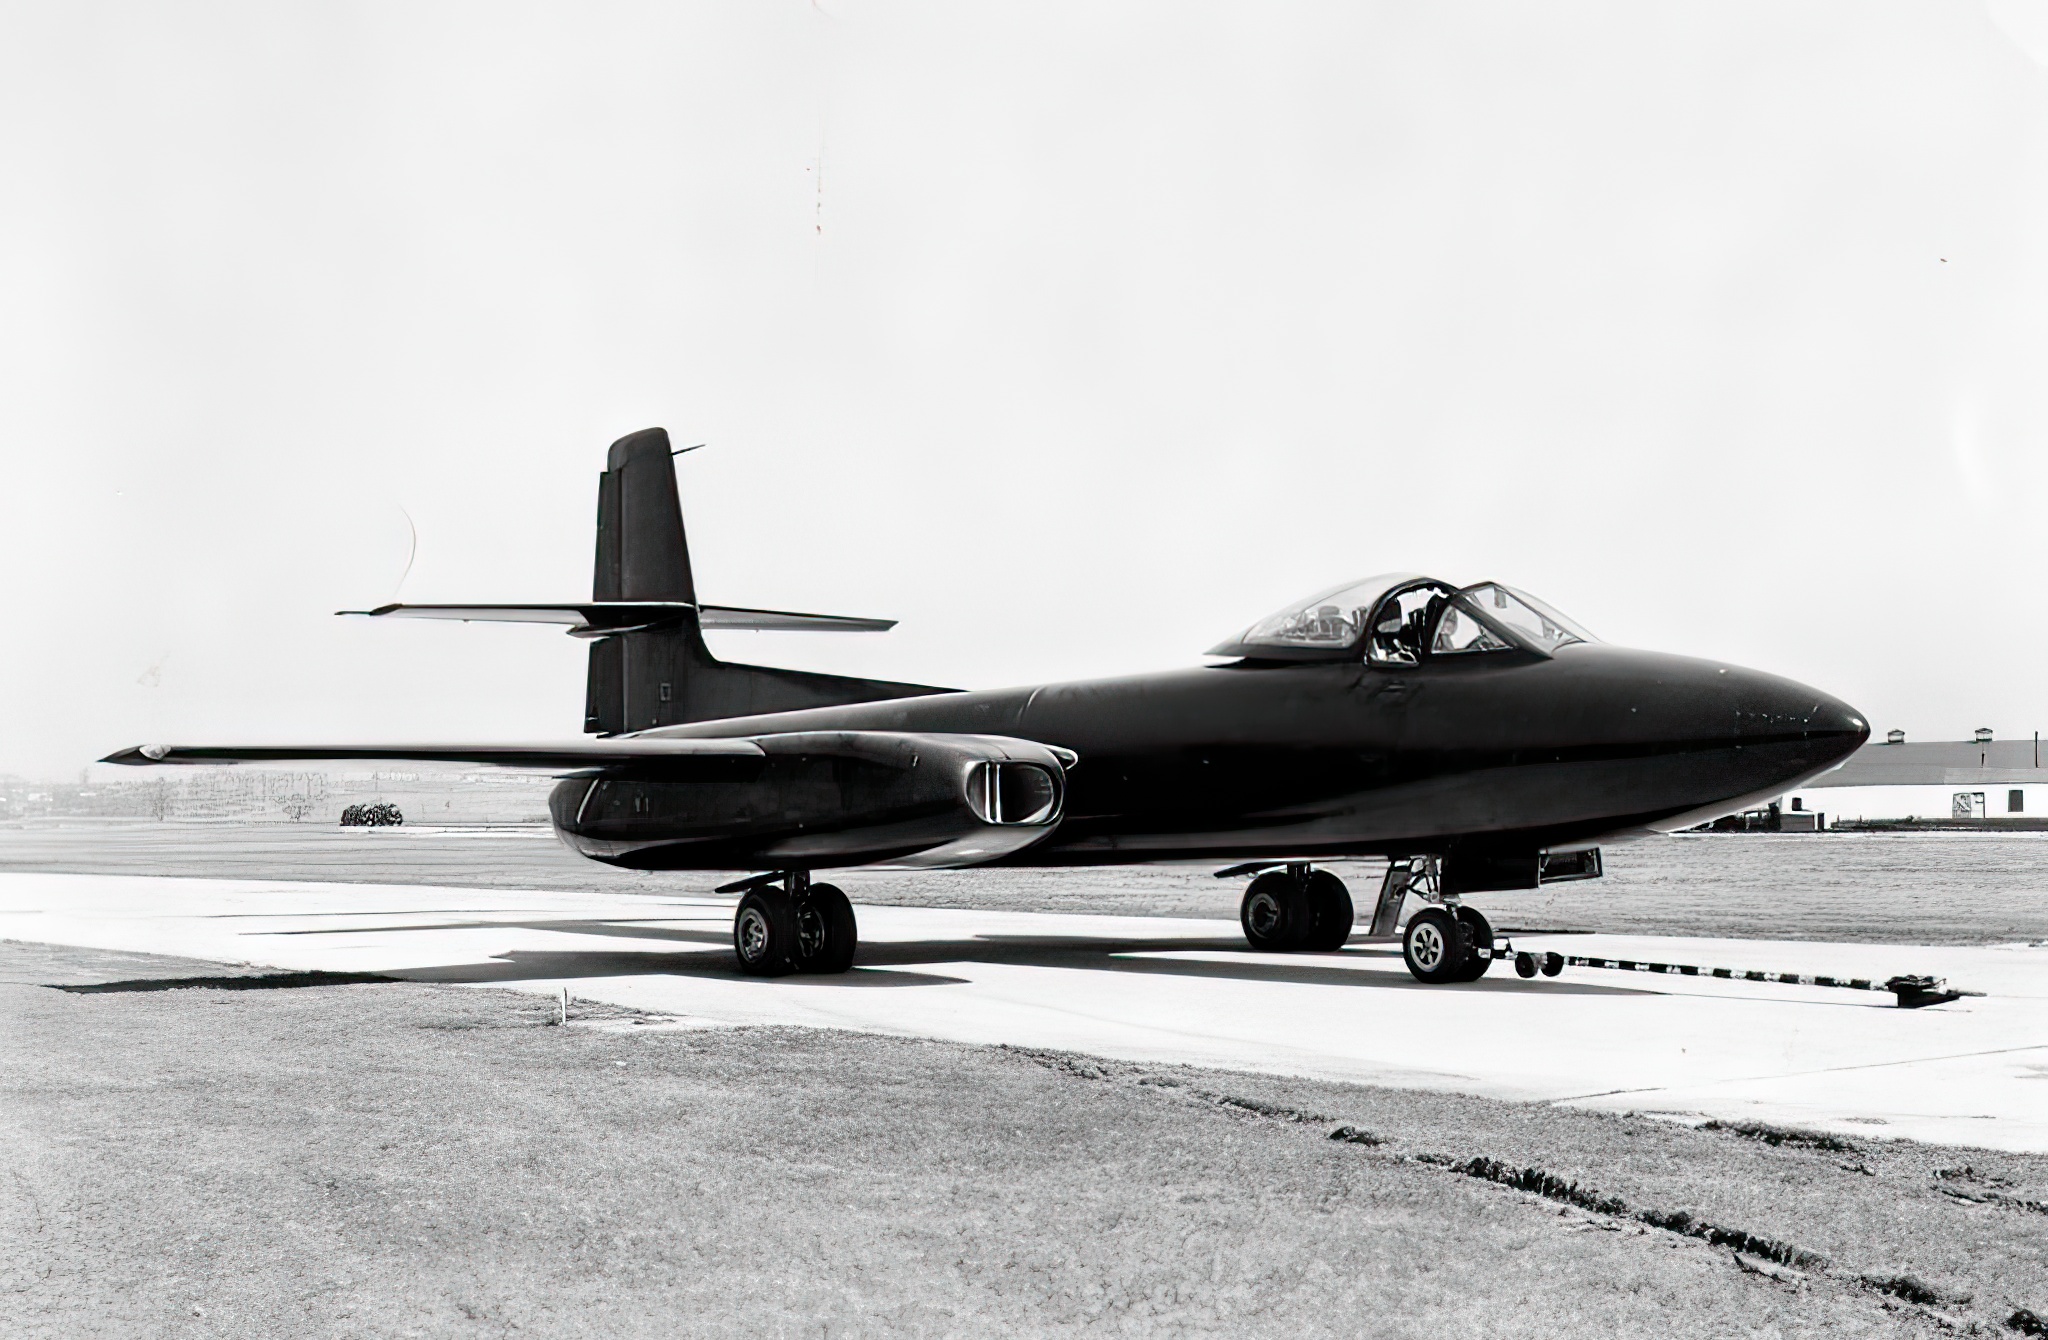 XF-87 Blackhawk